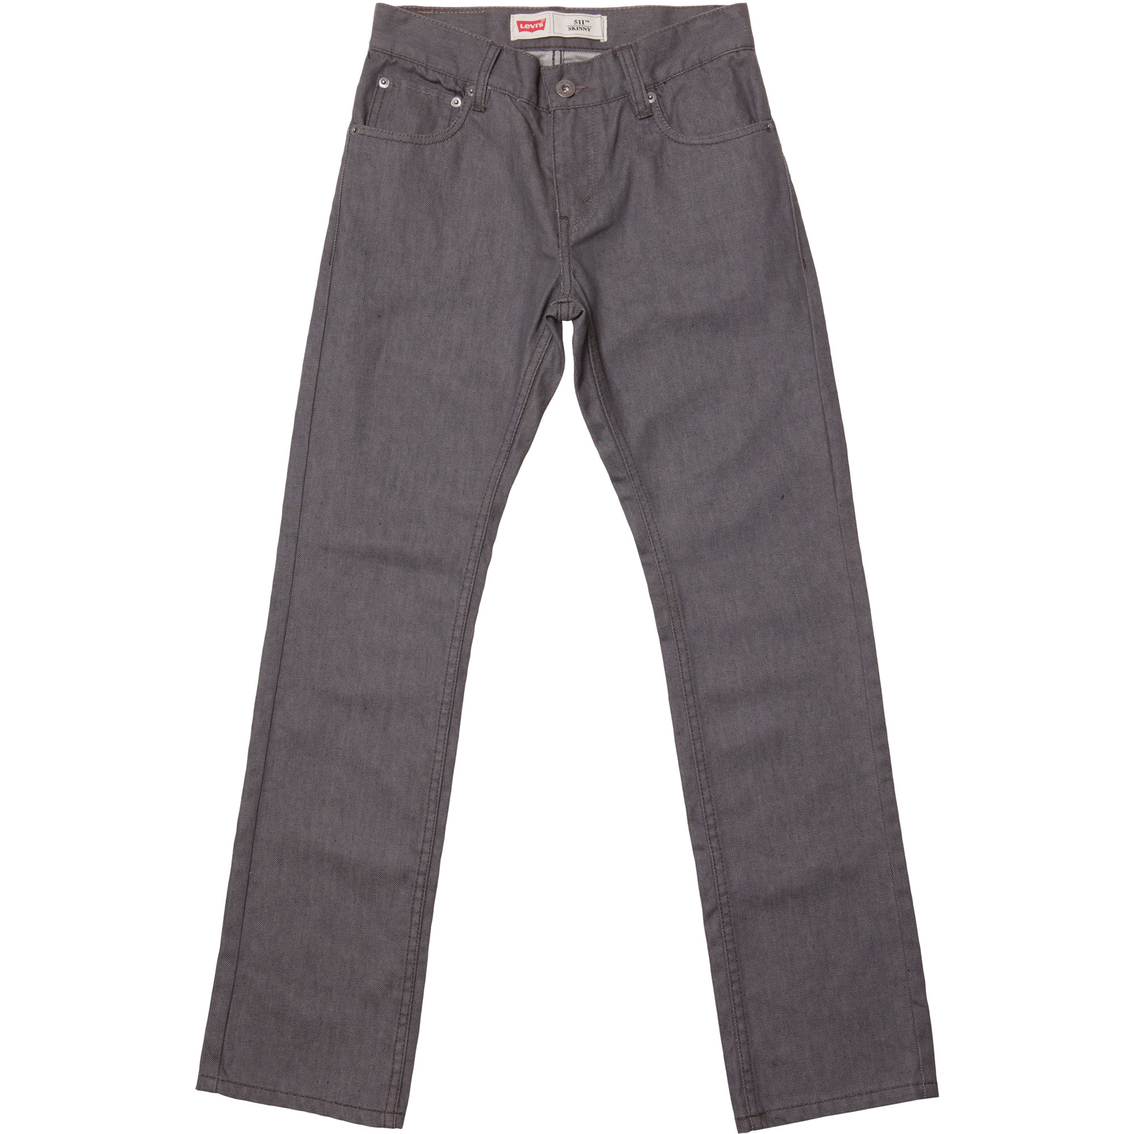 Levi's Boys 511 Slim Fit Jeans | Boys 8-20 | Clothing & Accessories ...